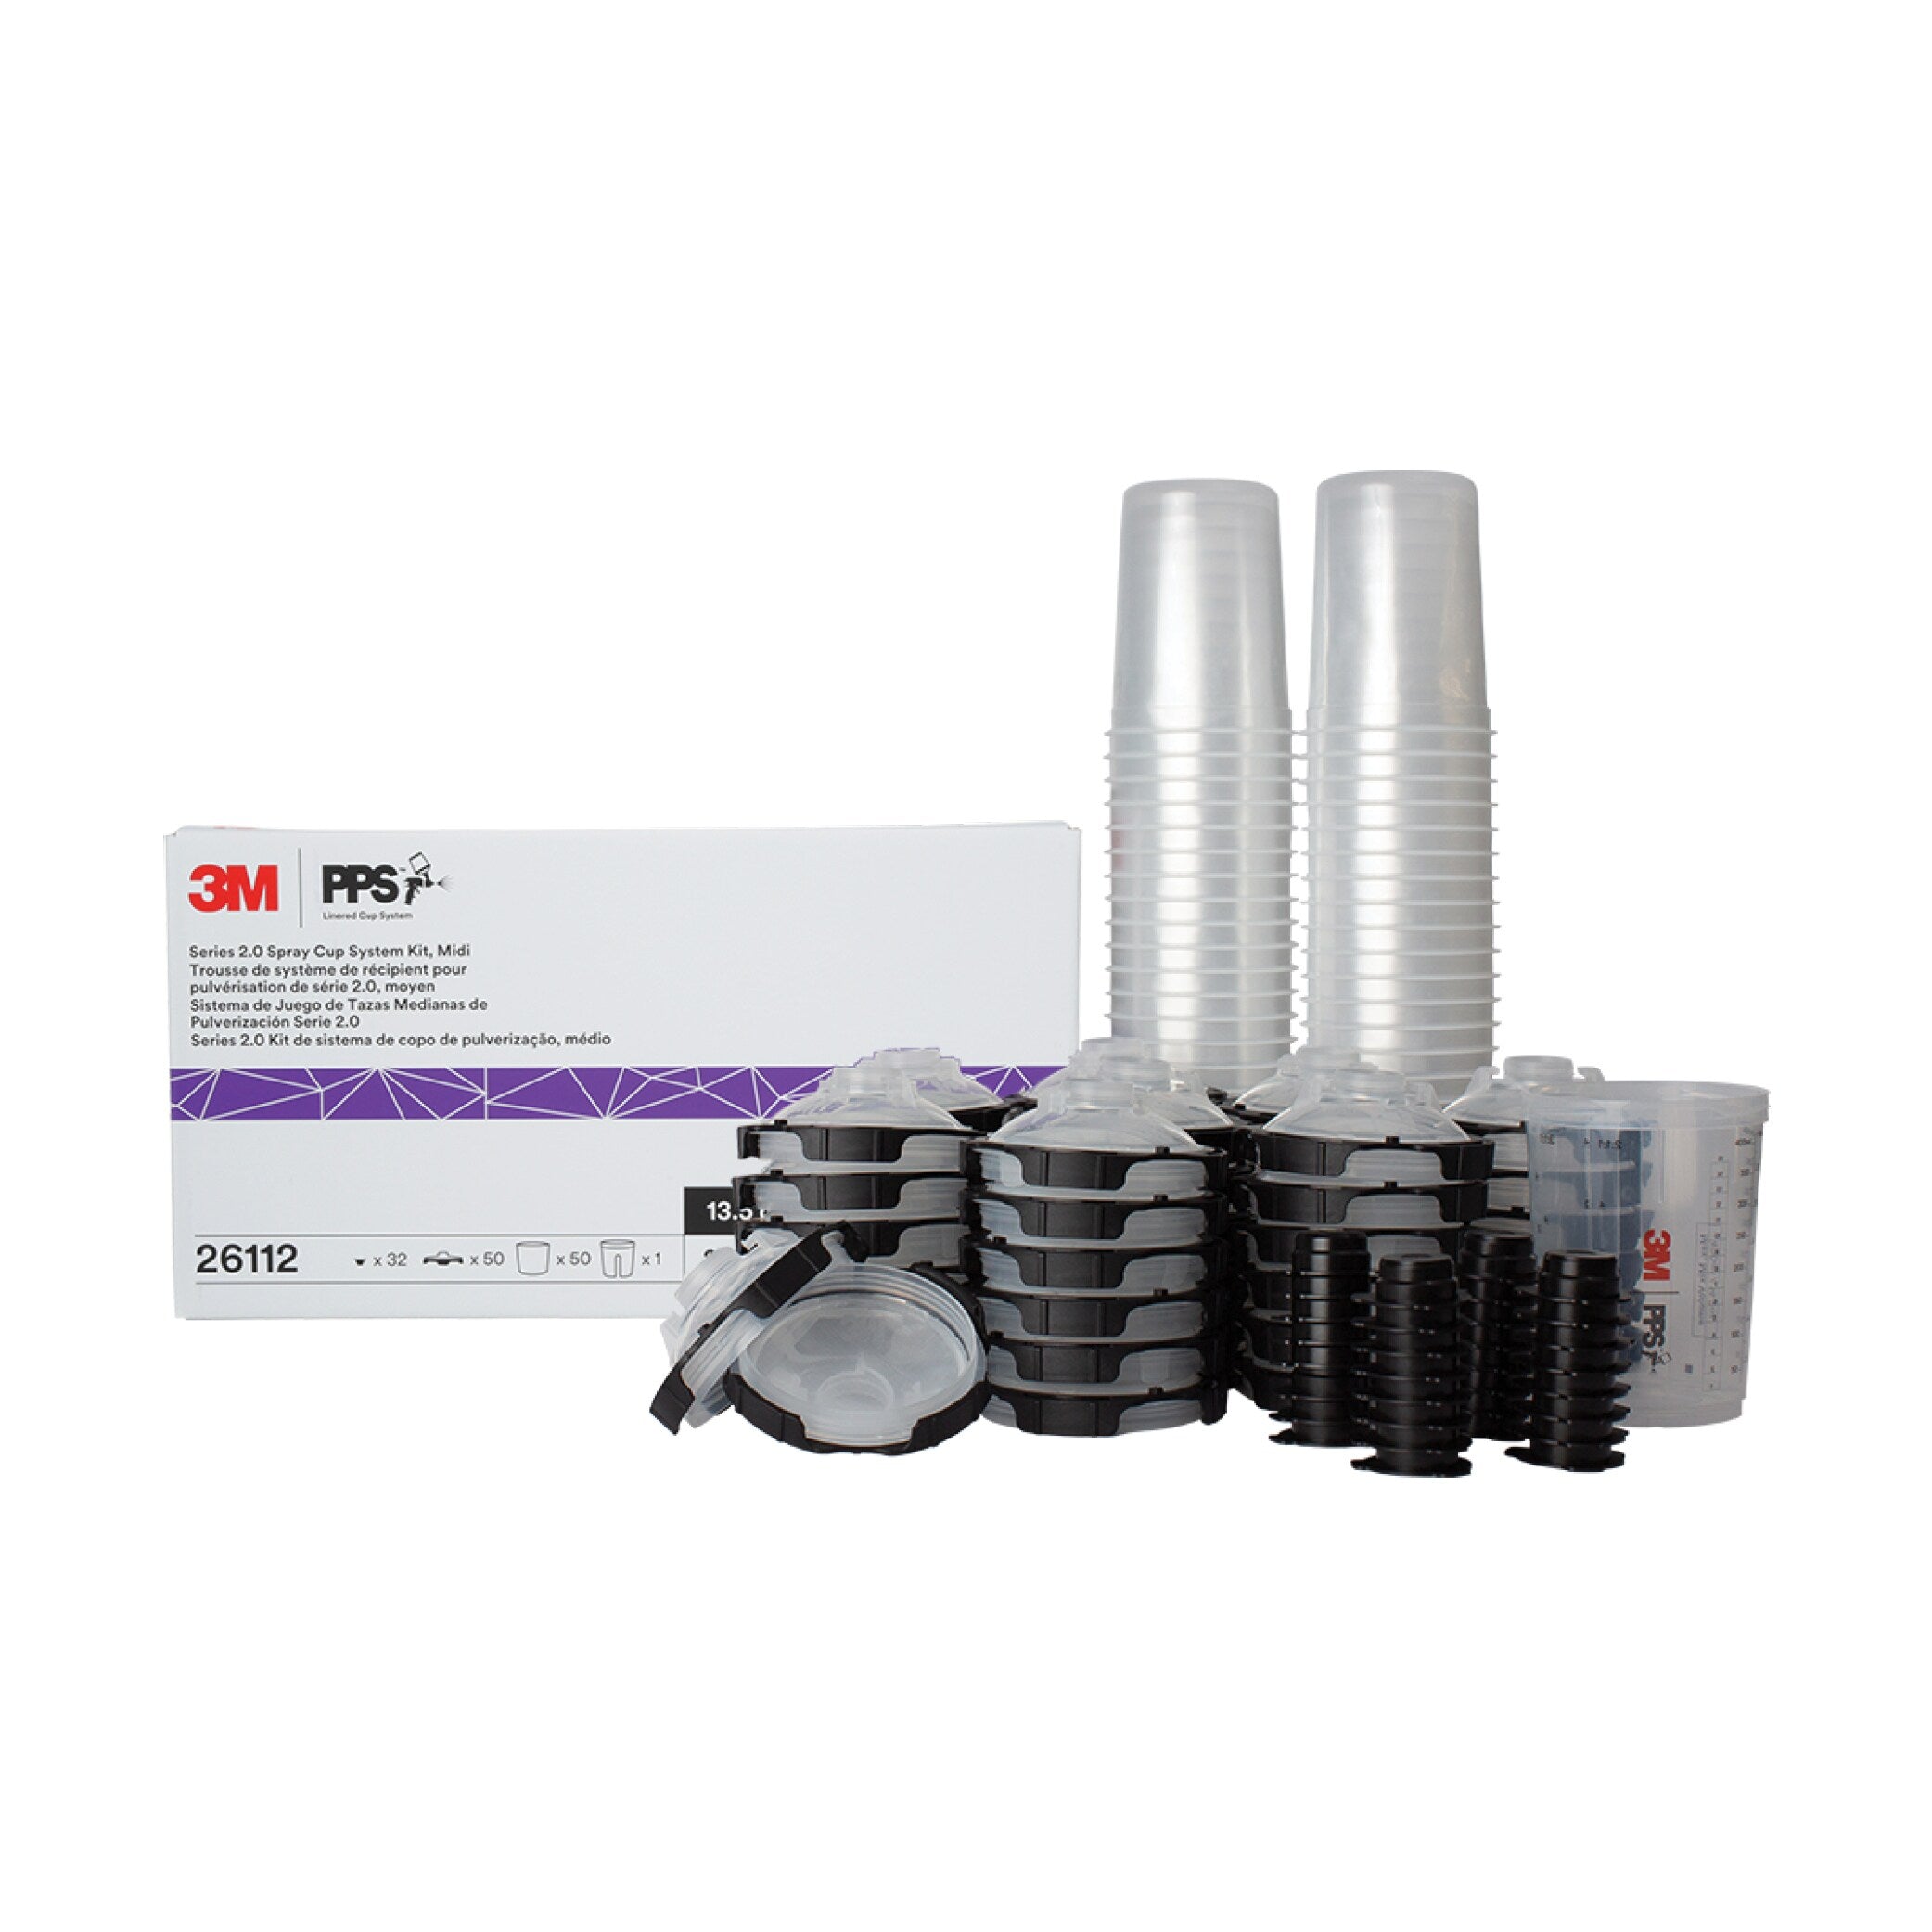 3M™ PPS™ Series 2.0 Spray Cup System Kit, 26112, Midi 13.5 fl oz, 50 Per